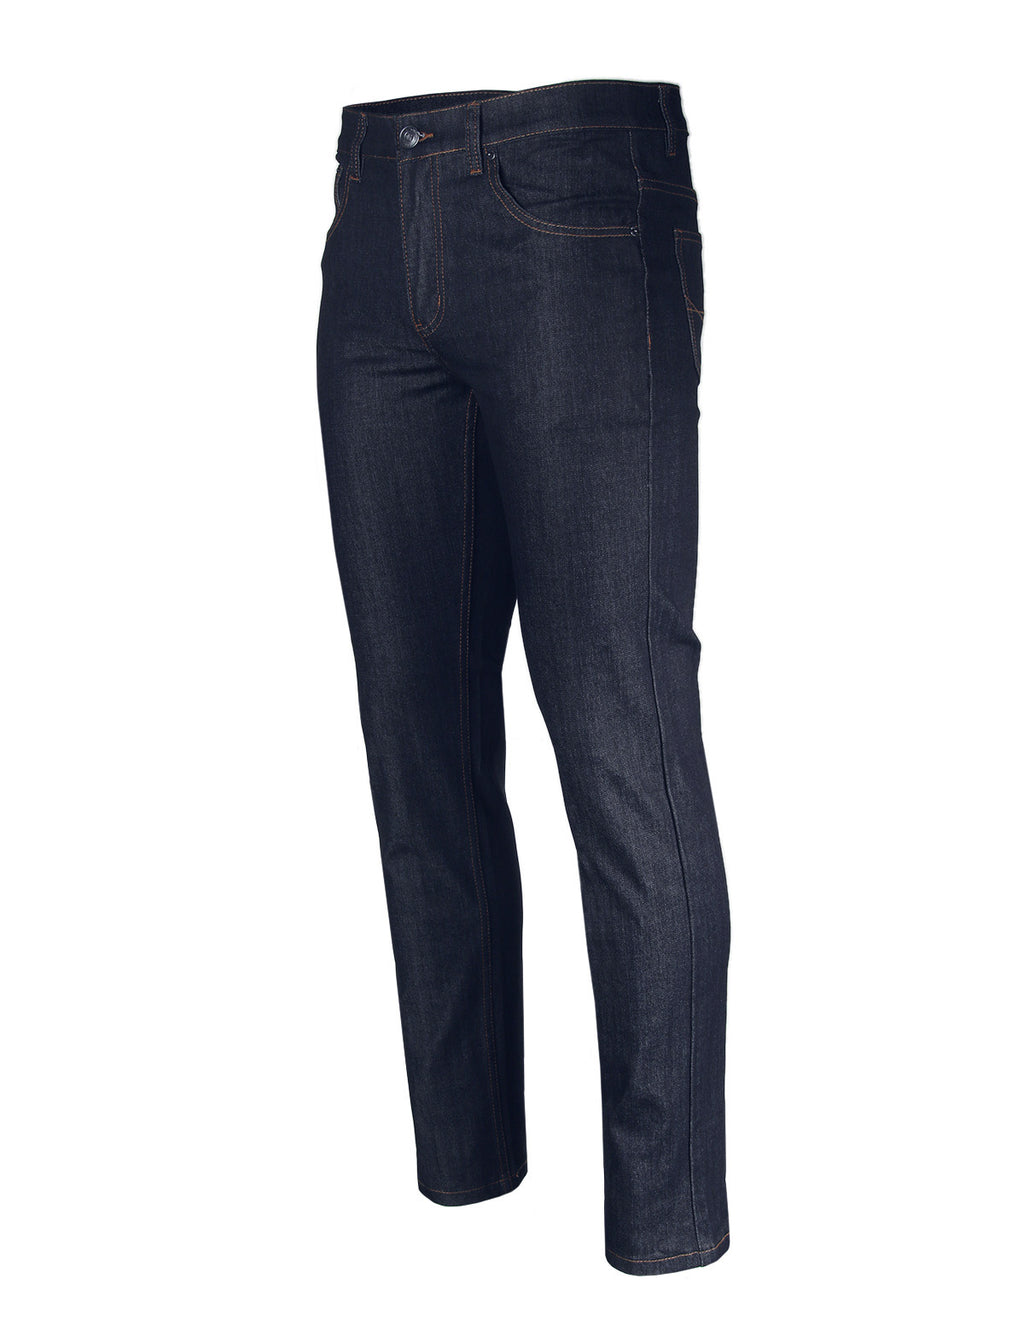 ZIMEGO Men's Slim Cut Skinny Fit Stretch Raw Denim Pants Classic Five Pocket Jeans - INDIGO TIMBER